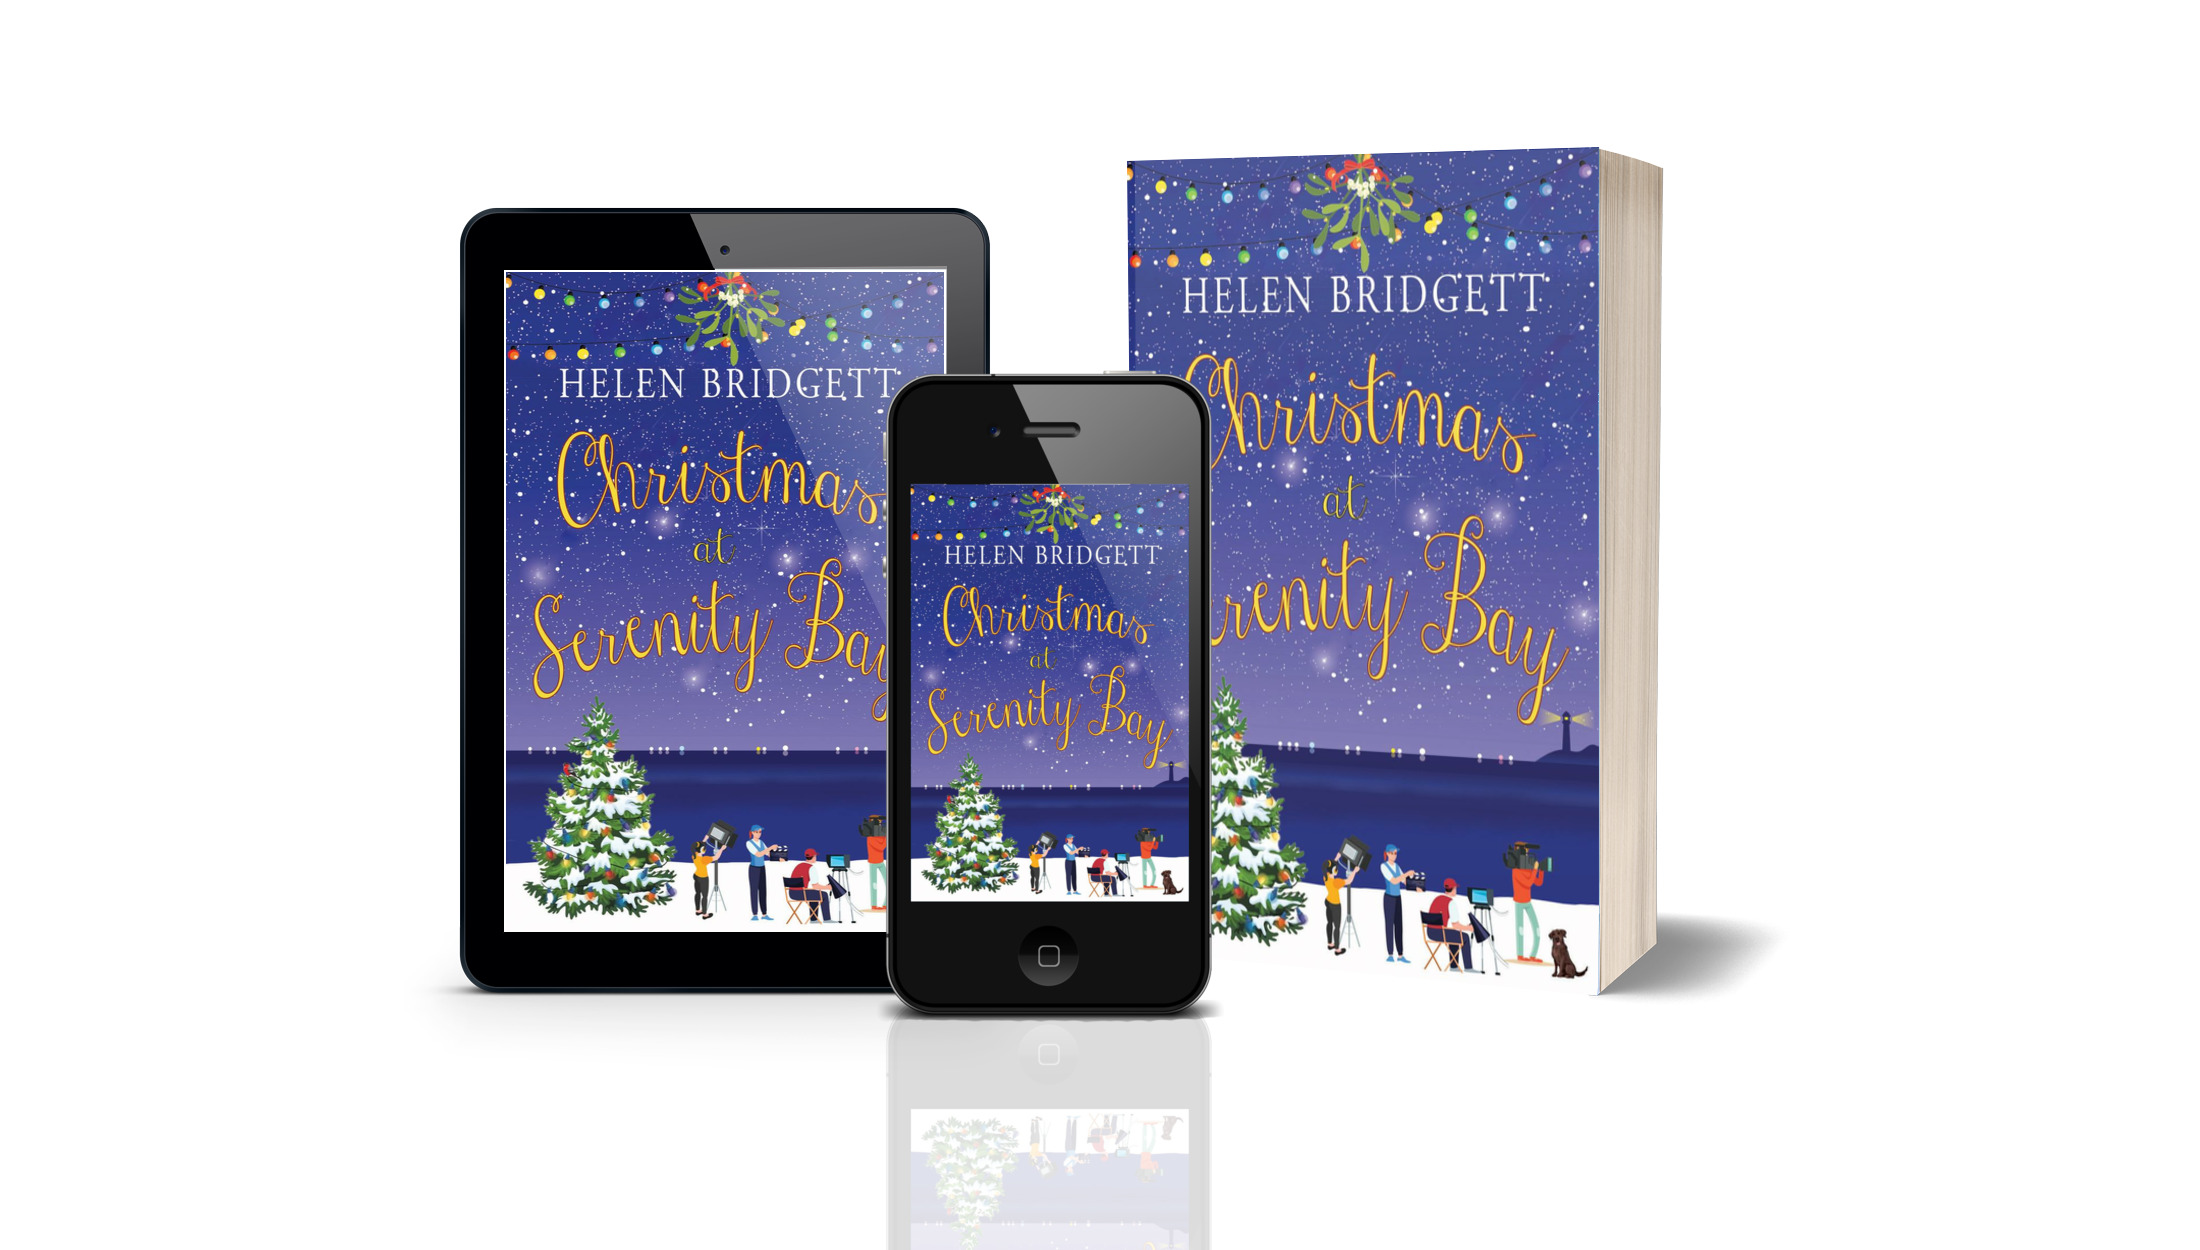 Helen Bridgett – Christmas at Serenity Bay